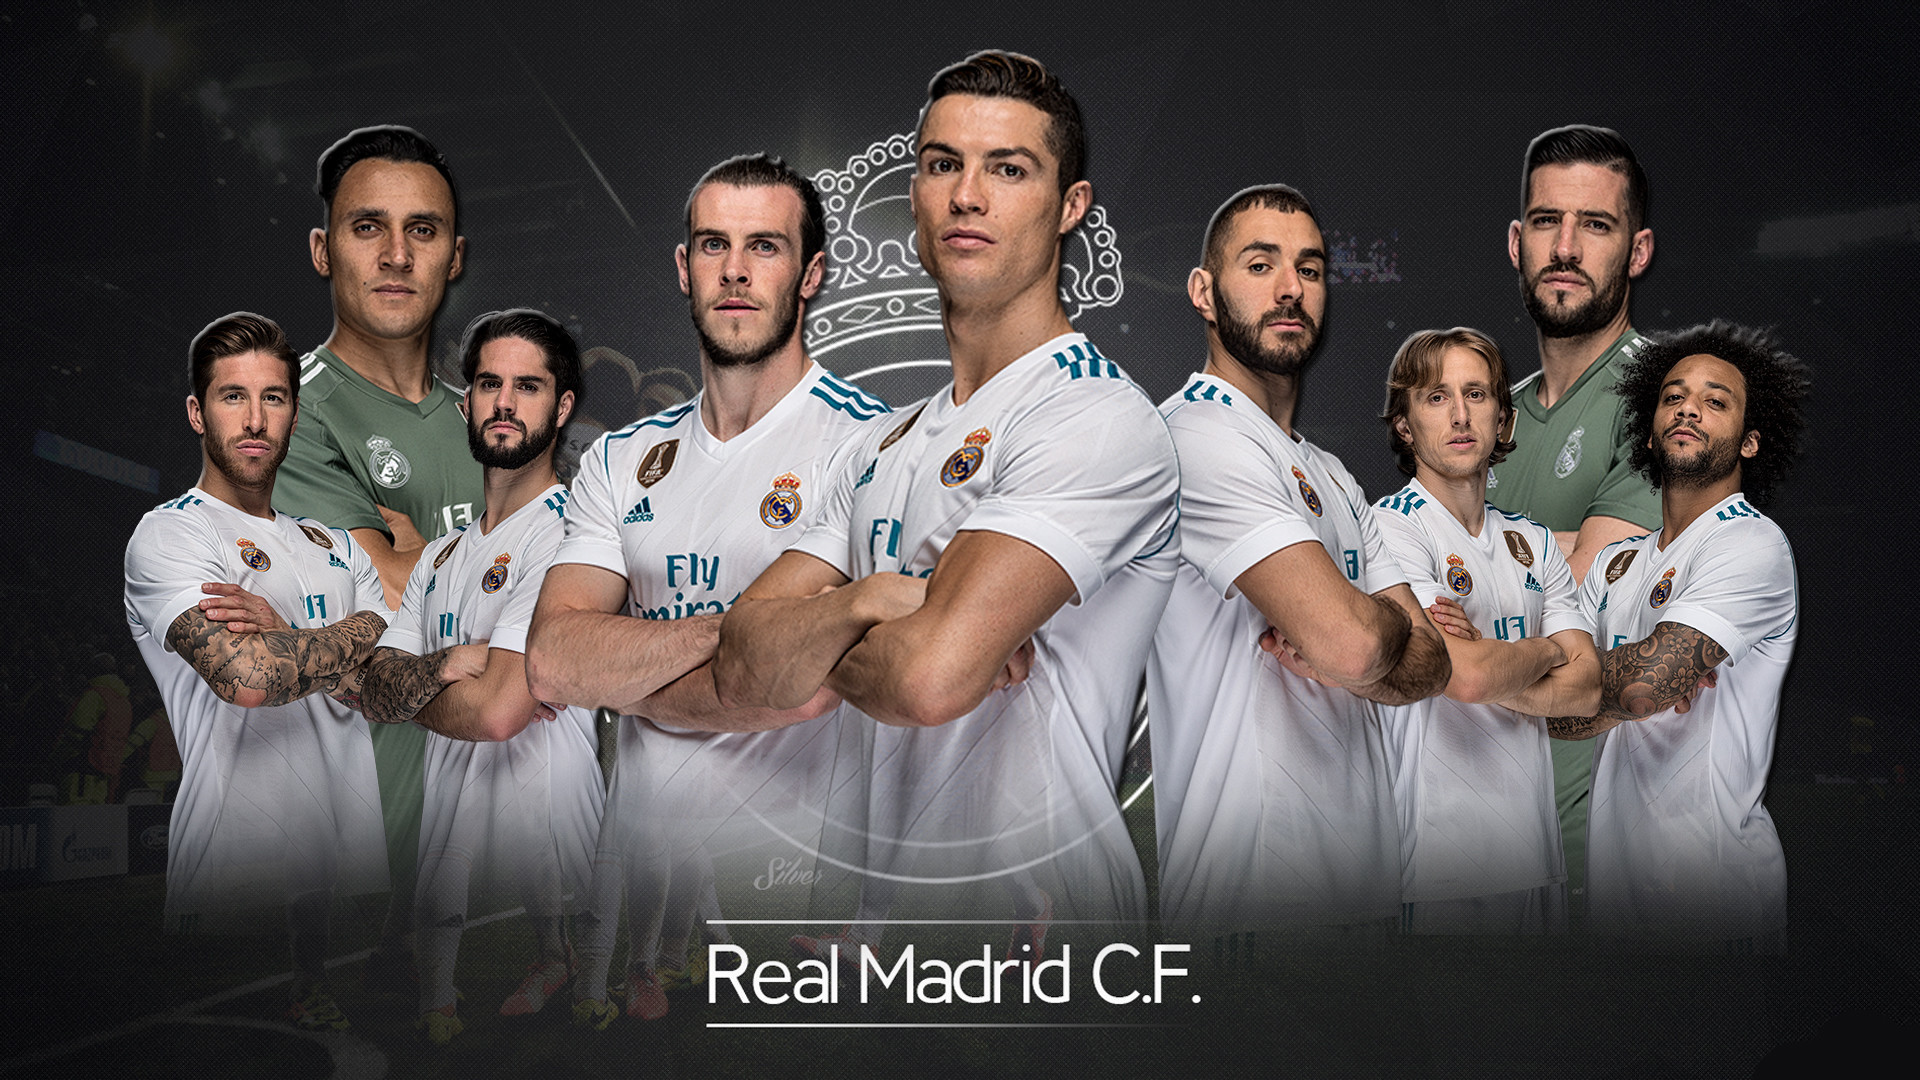 19+ Real Madrid Players 2018 Wallpapers on WallpaperSafari